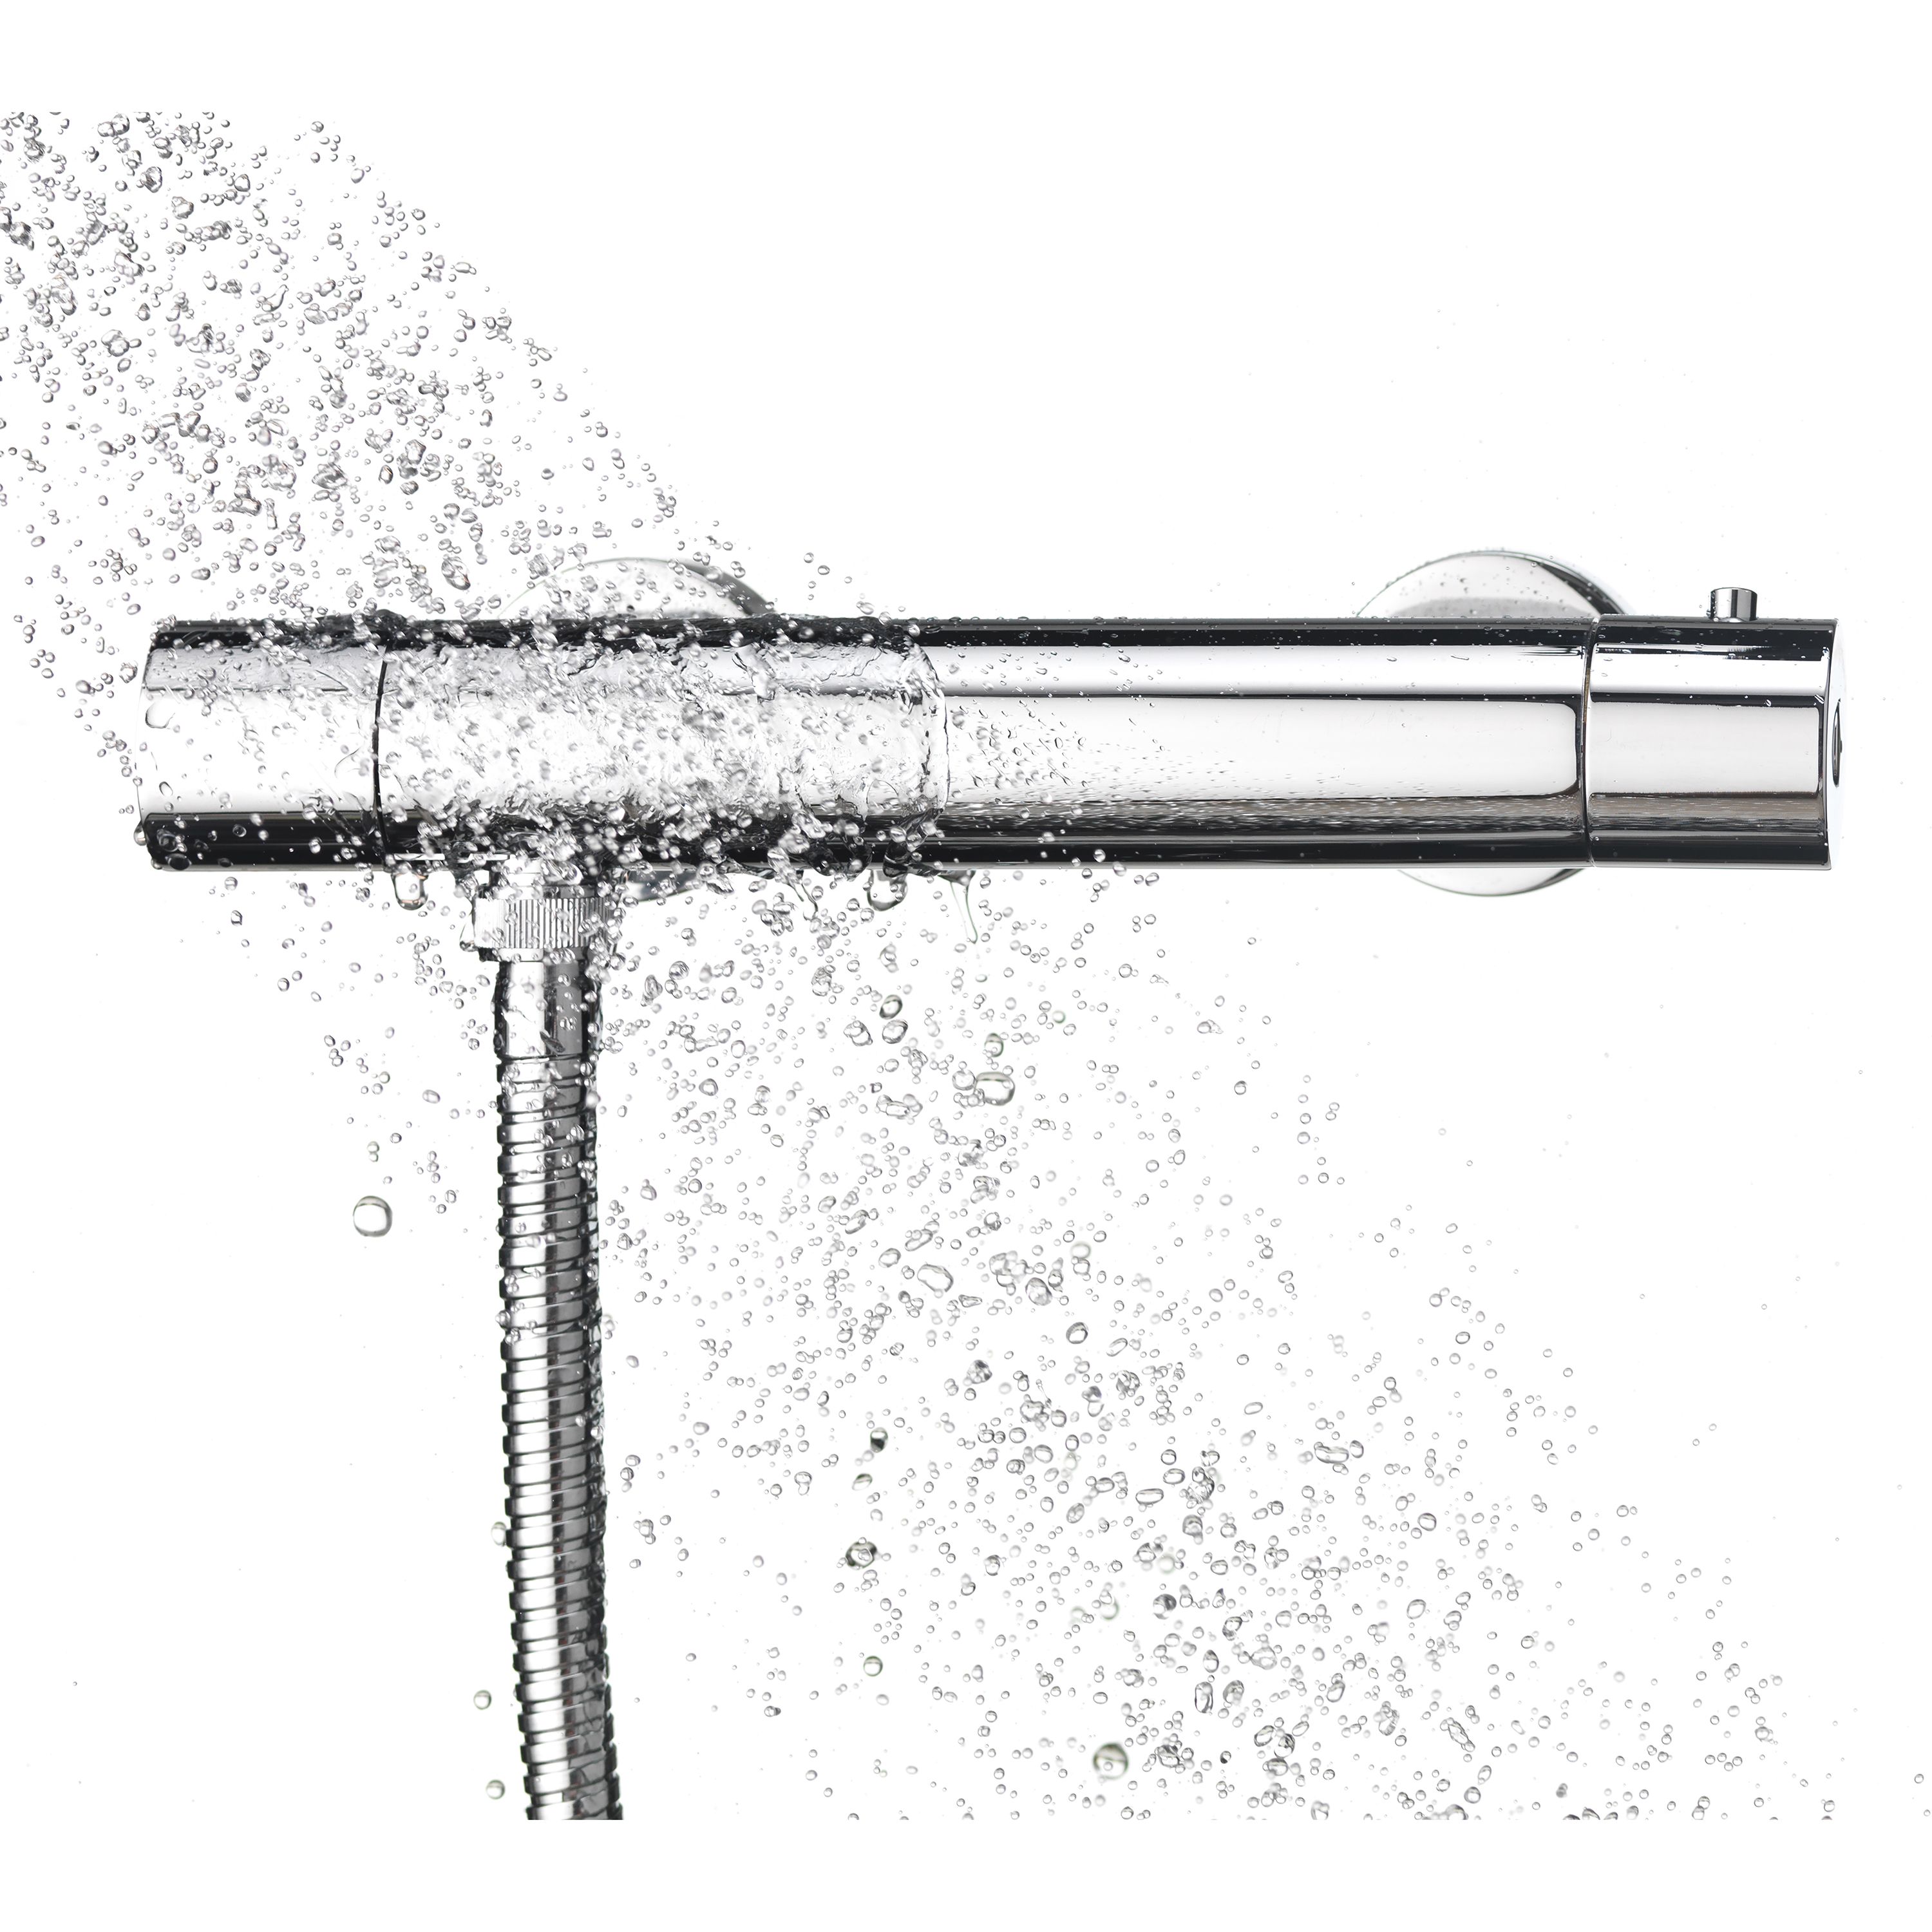 Aqualisa Sierra Gloss Chrome effect Rear fed Thermostatic Mixer Shower